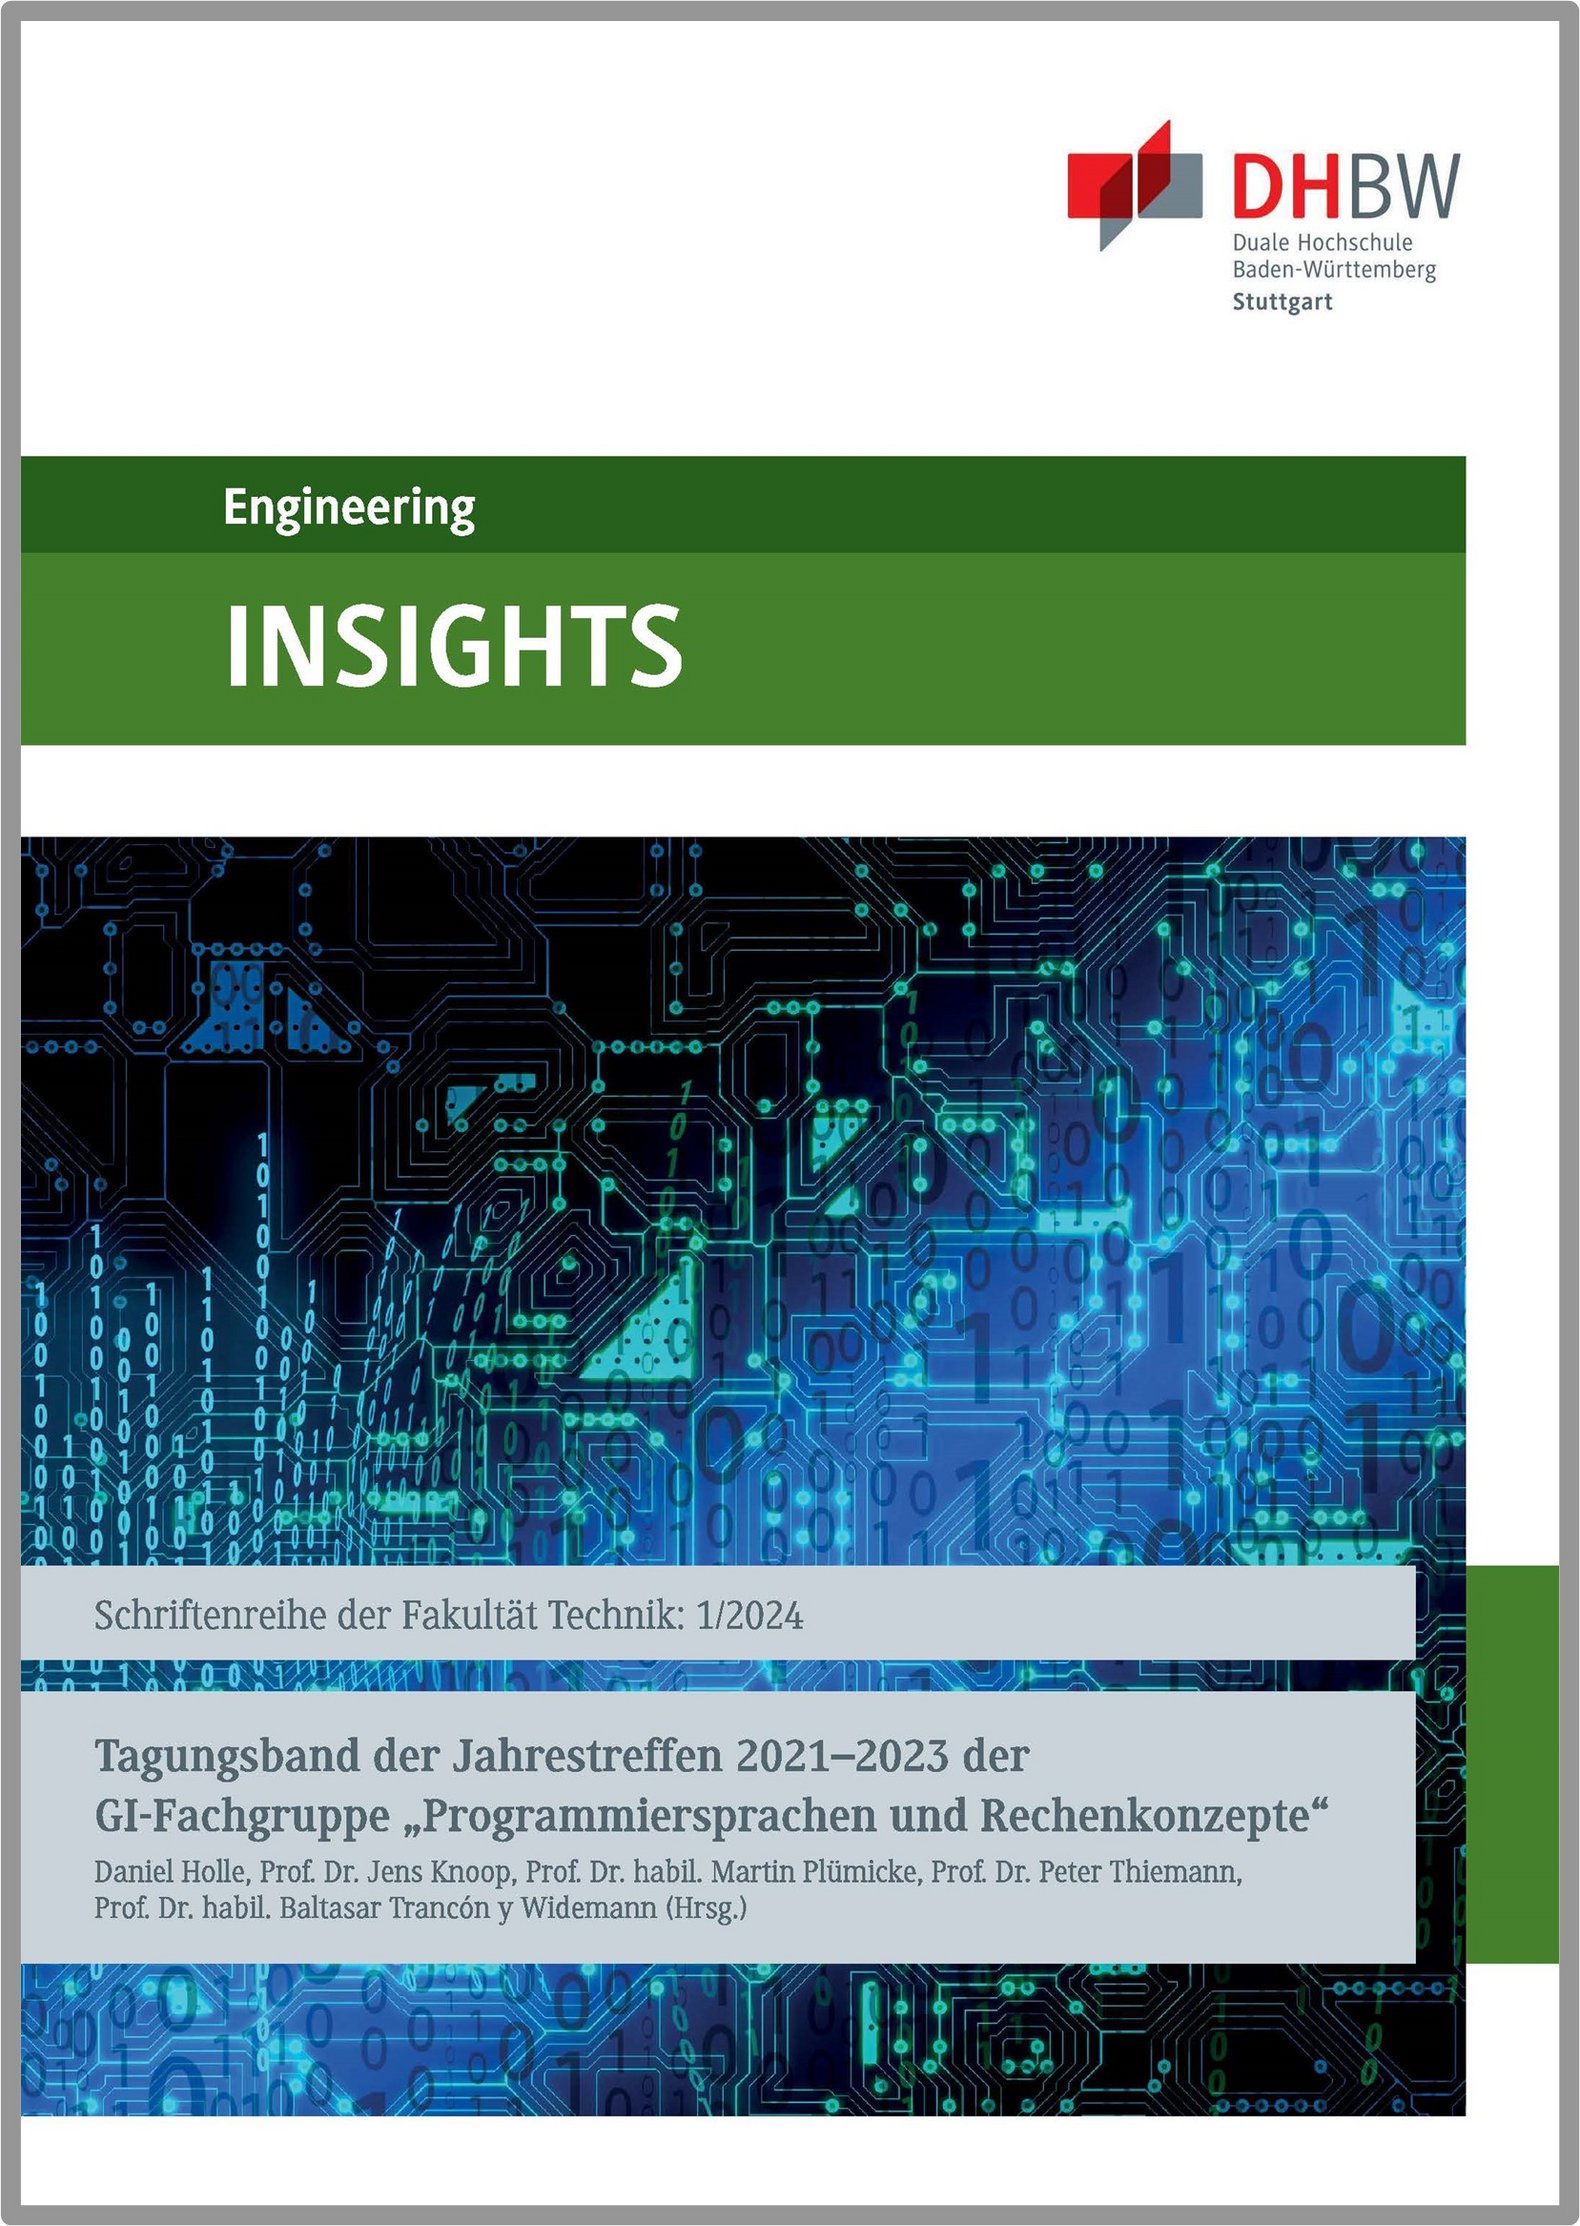 DHBW Stuttgart INSIGHTS 1/2024 GI-Fachgruppe Programmiersprachen Rechenkonzepte 2021-2023